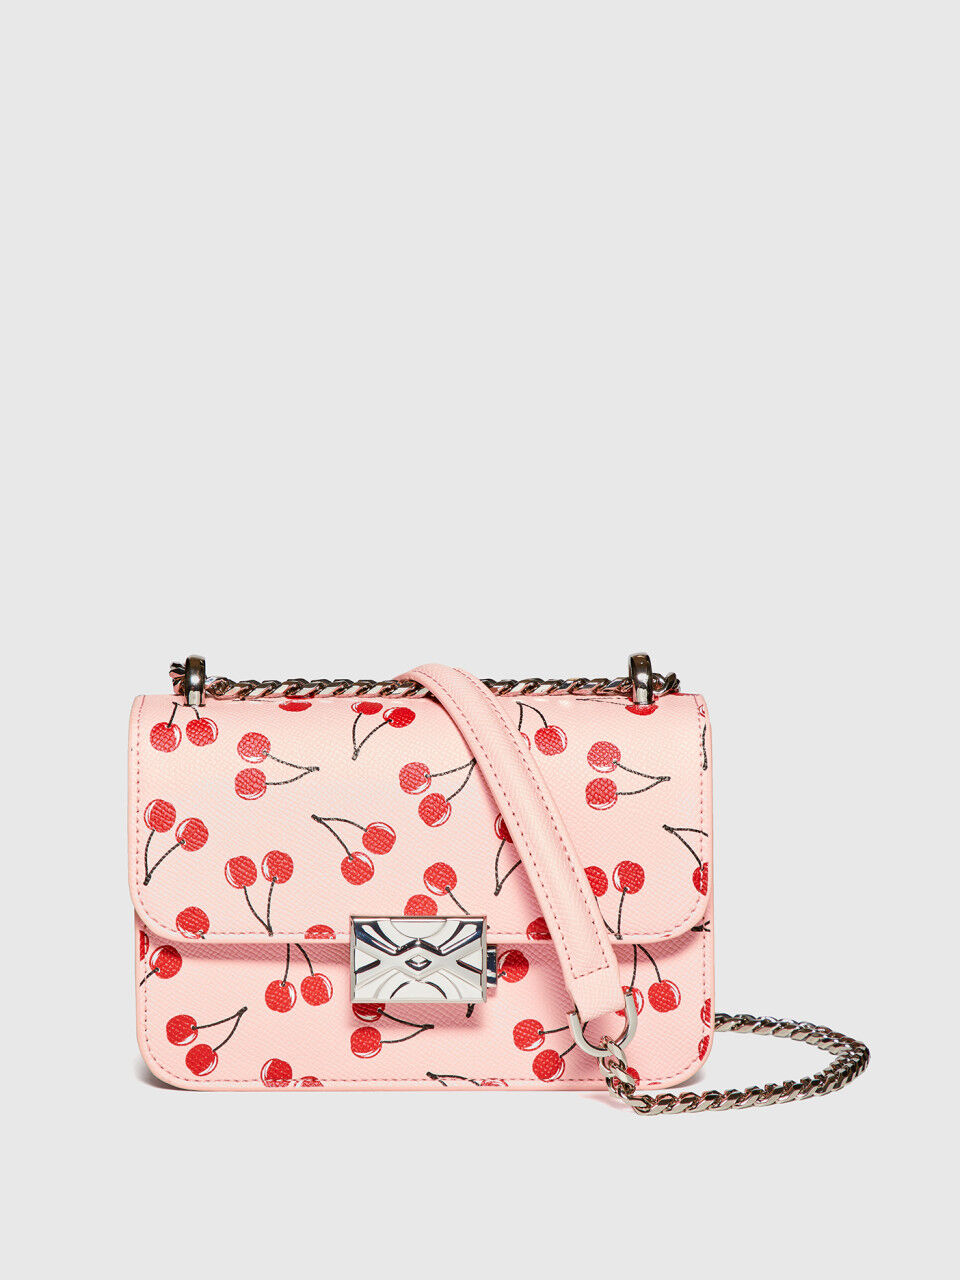 Petit sac Be Bag rose avec cerises